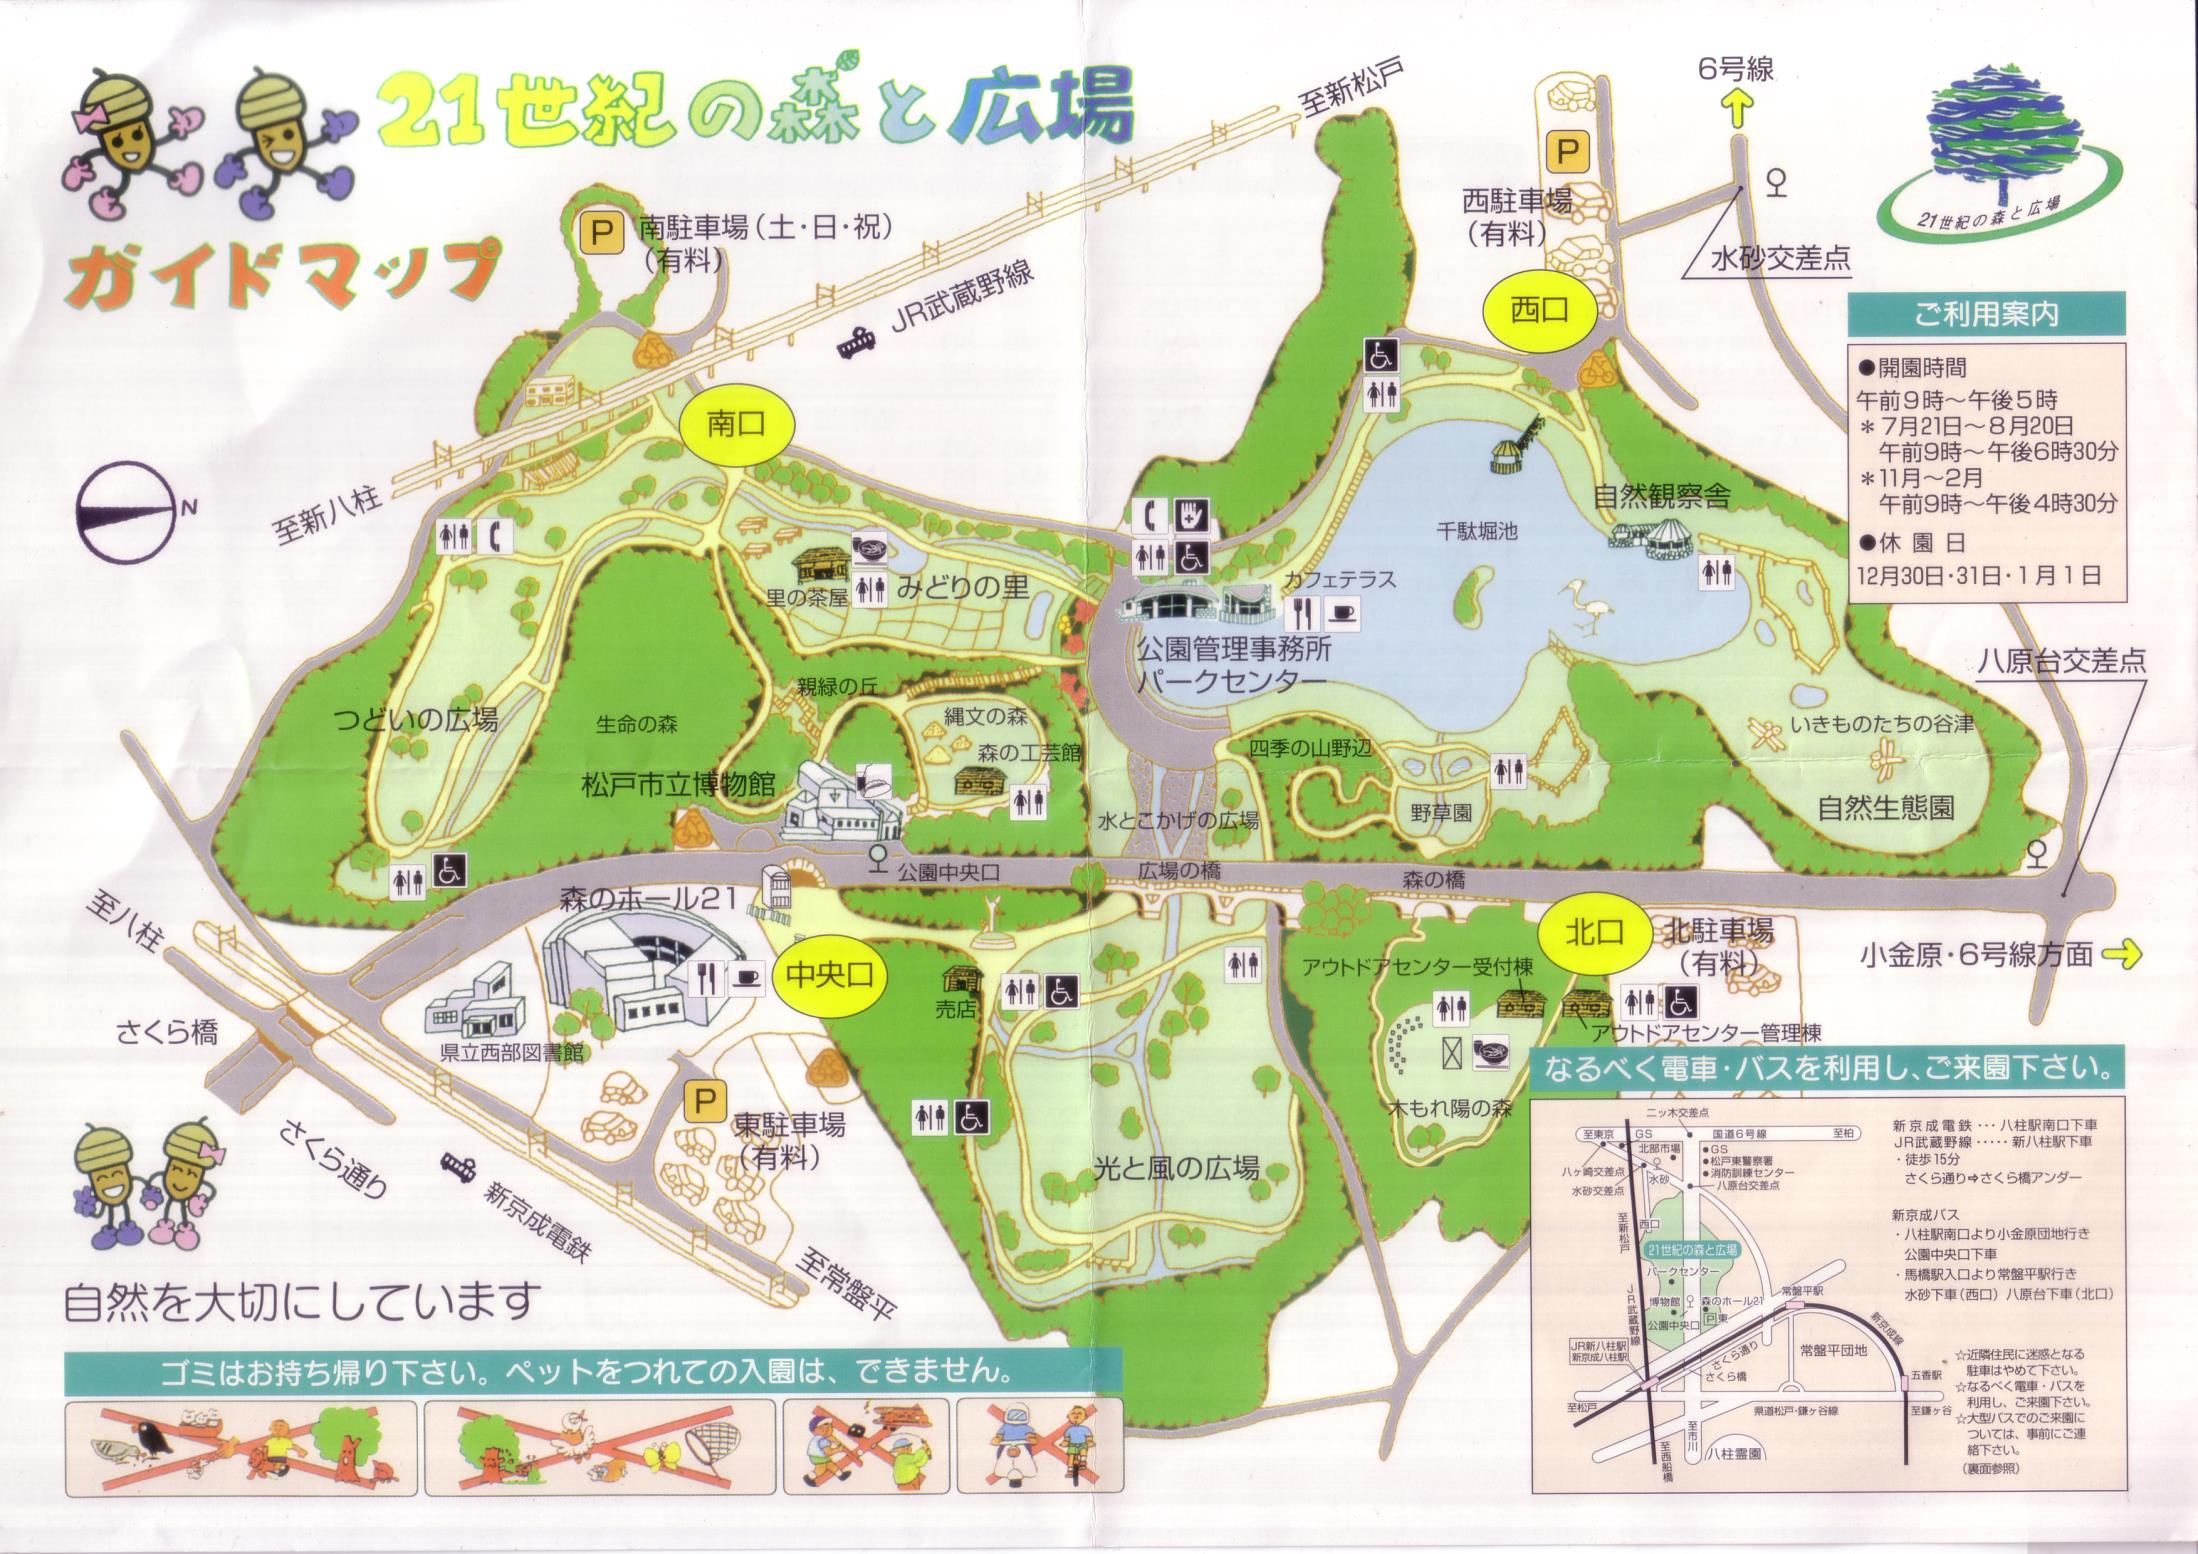 Taman dan Hutan abad 21 Matsudo